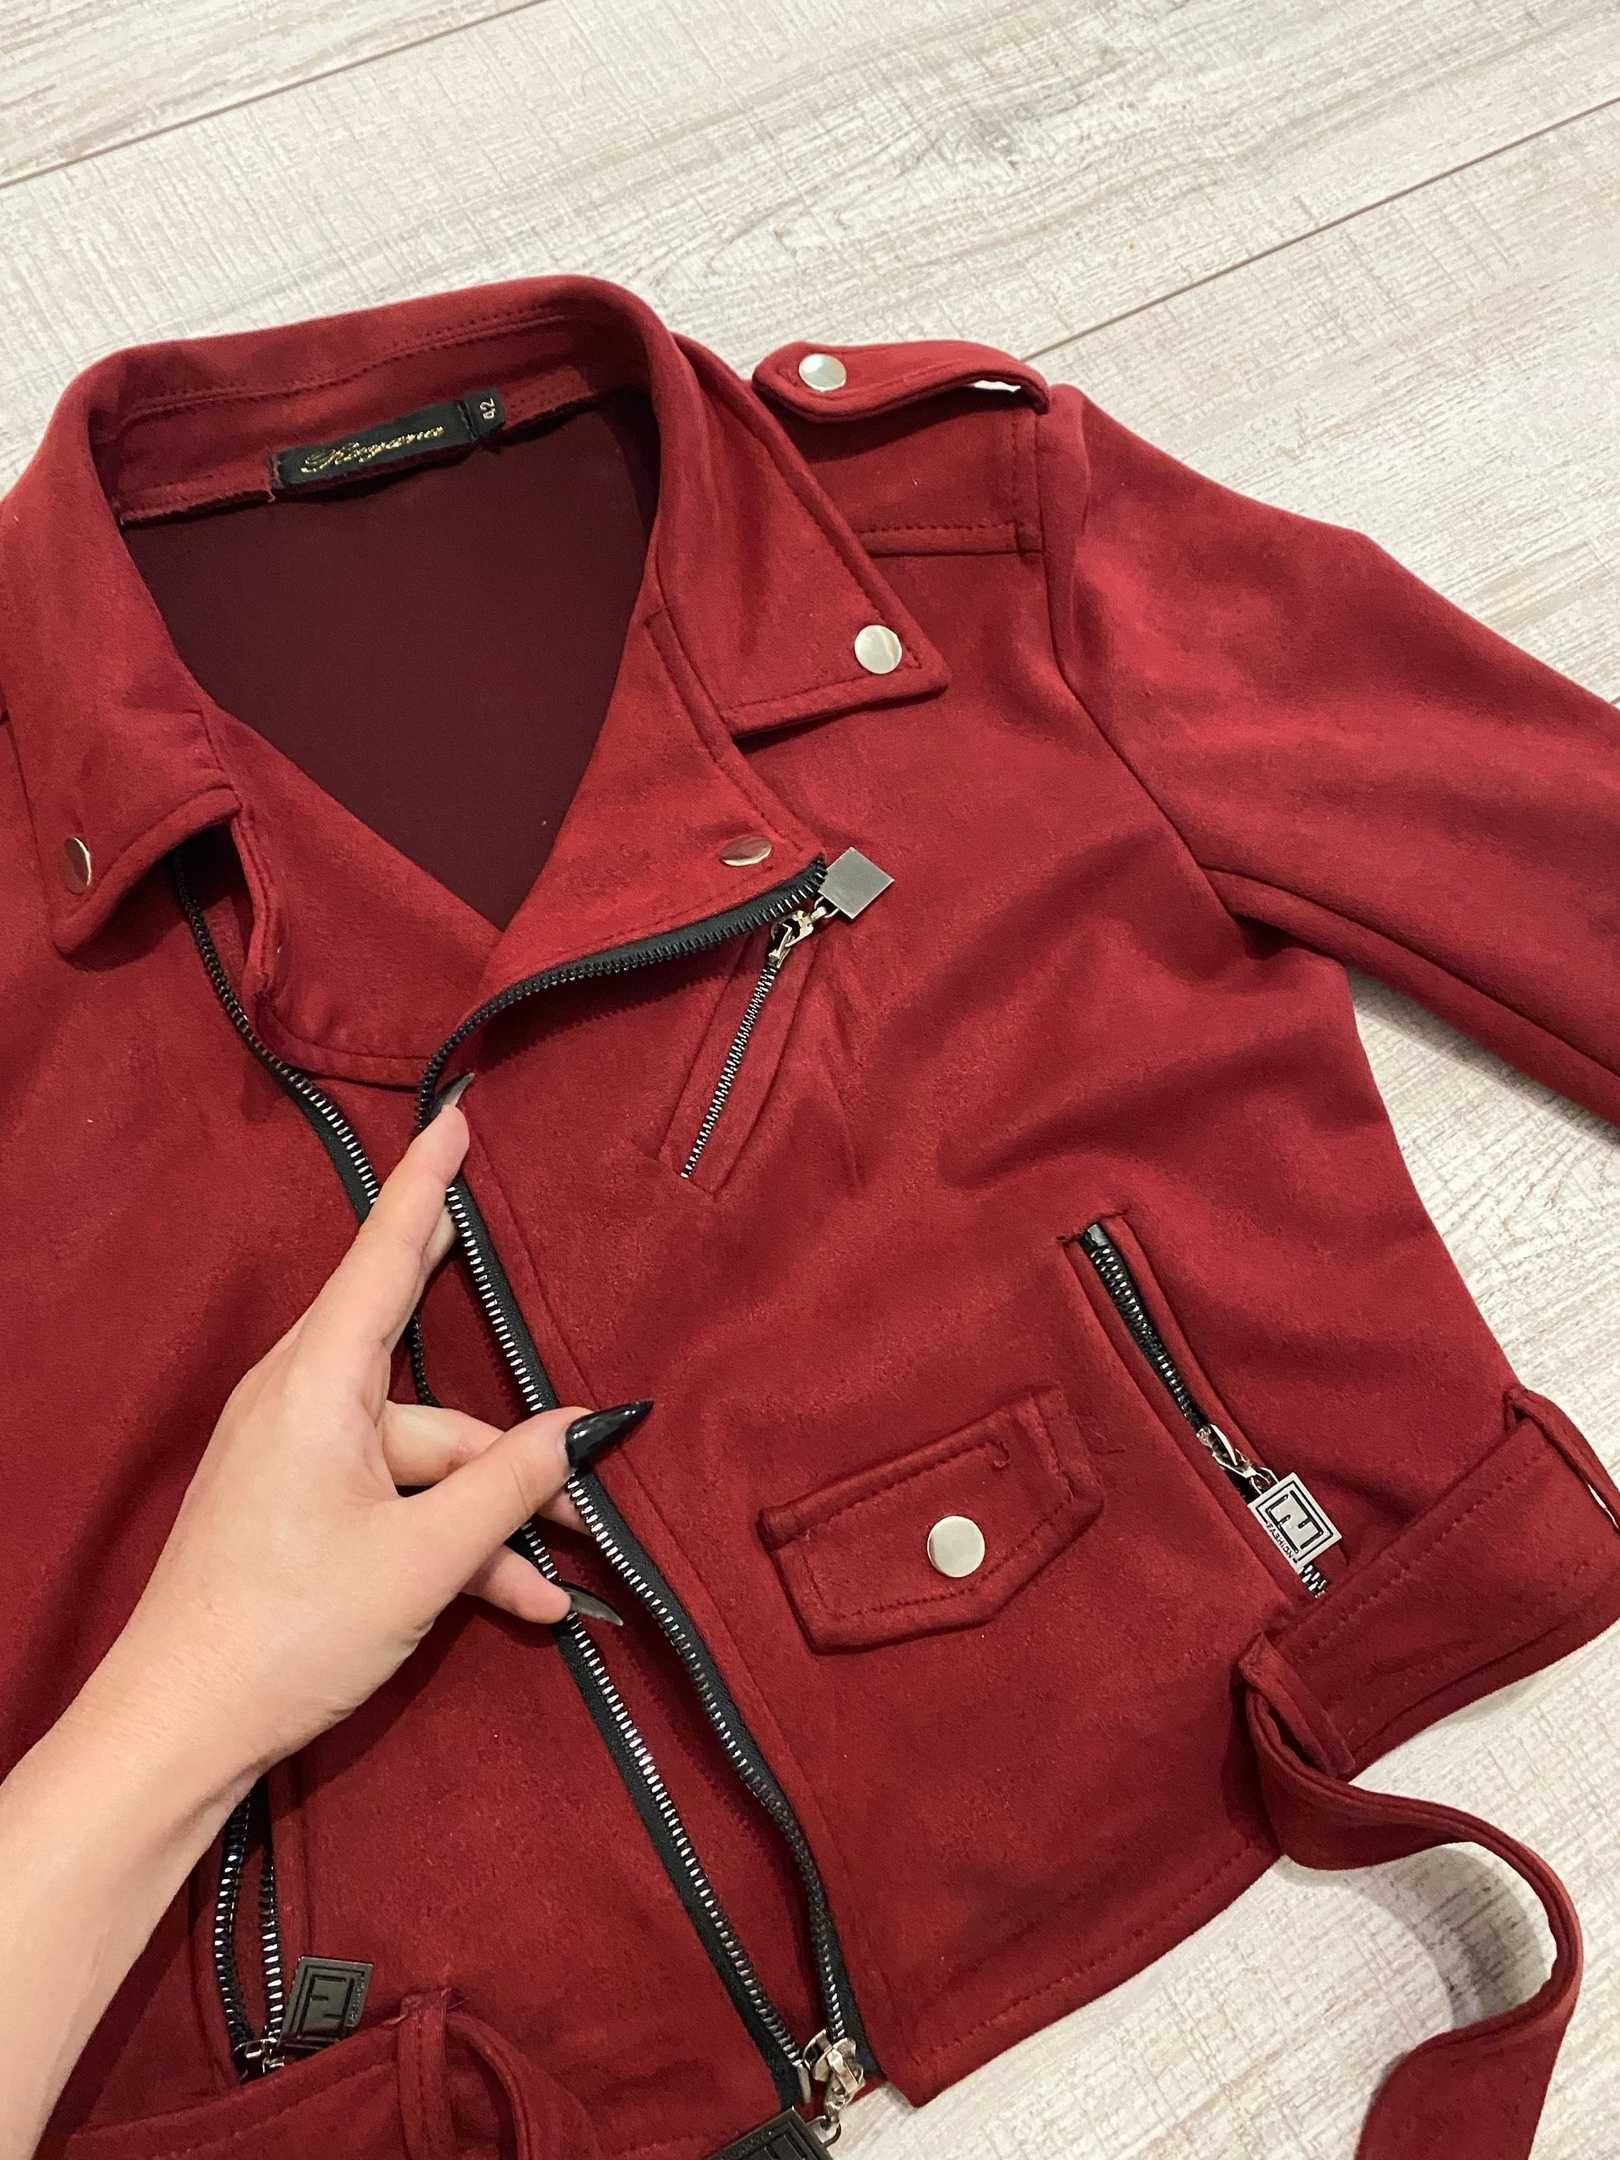 Курточка, красная, по фасону косуха, размер S